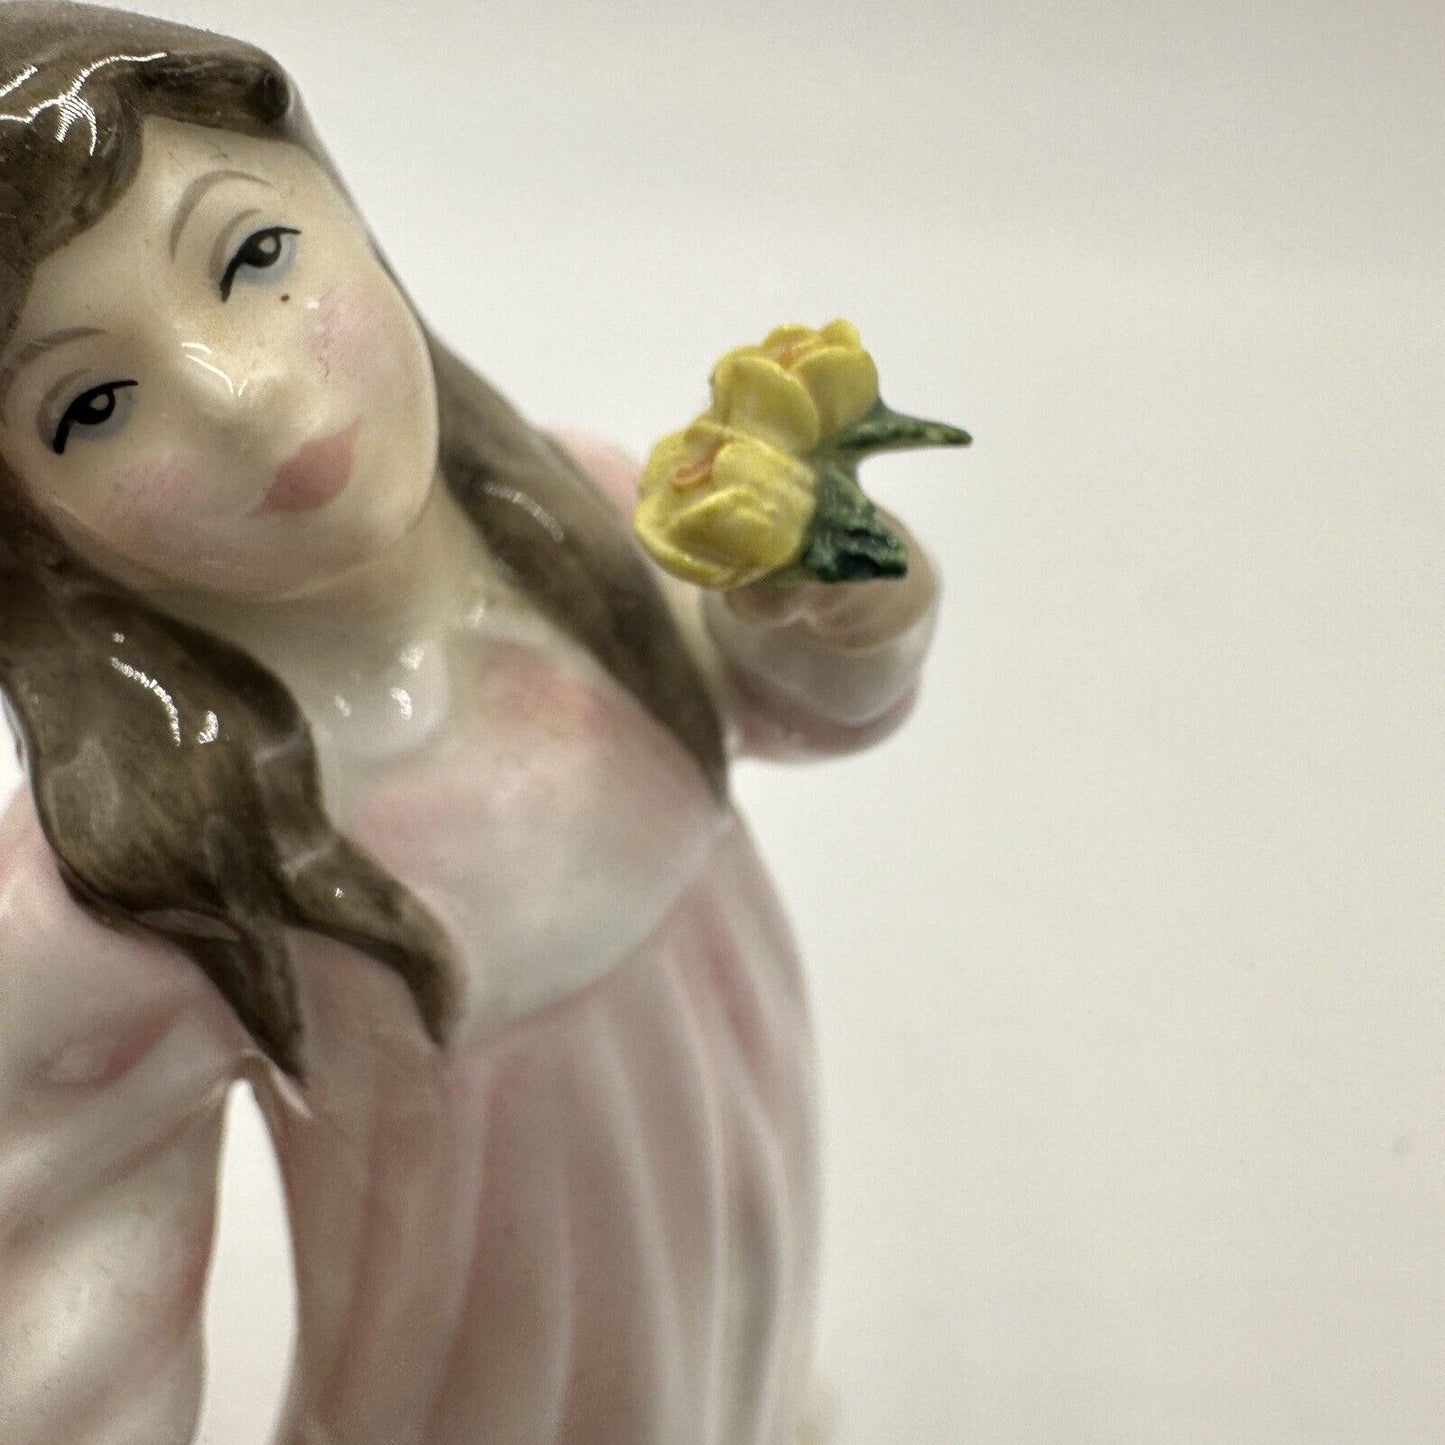 Royal Doulton Figurine Flowers For Mother Handpainted HN3454 England Porcelain